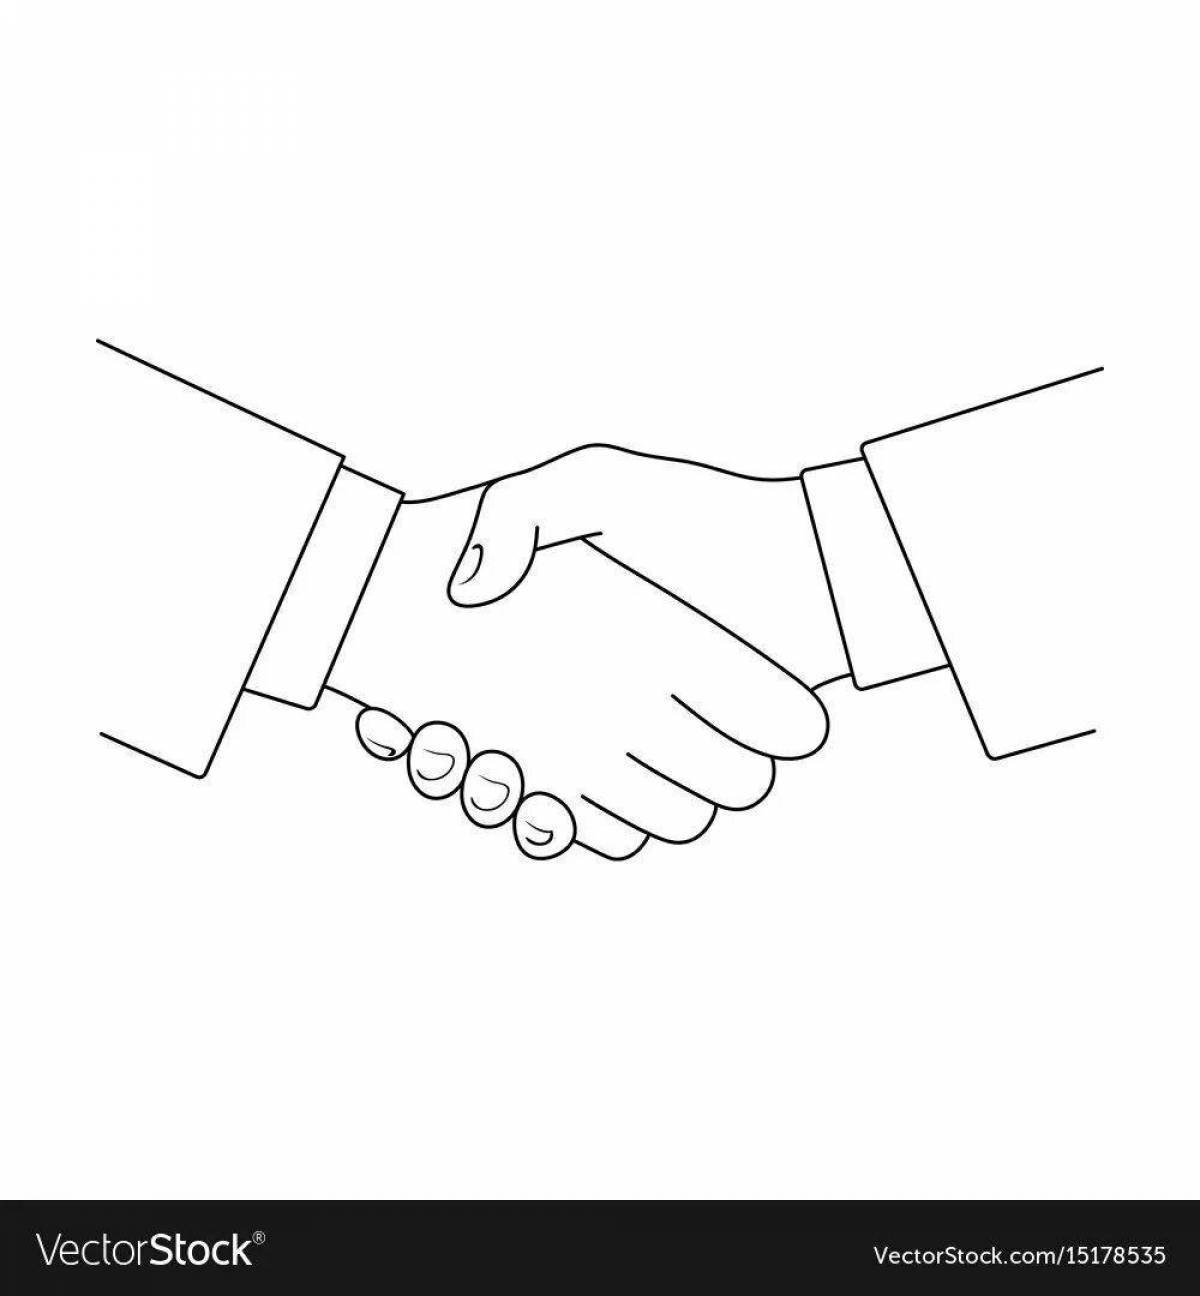 Handshake Coloring Page